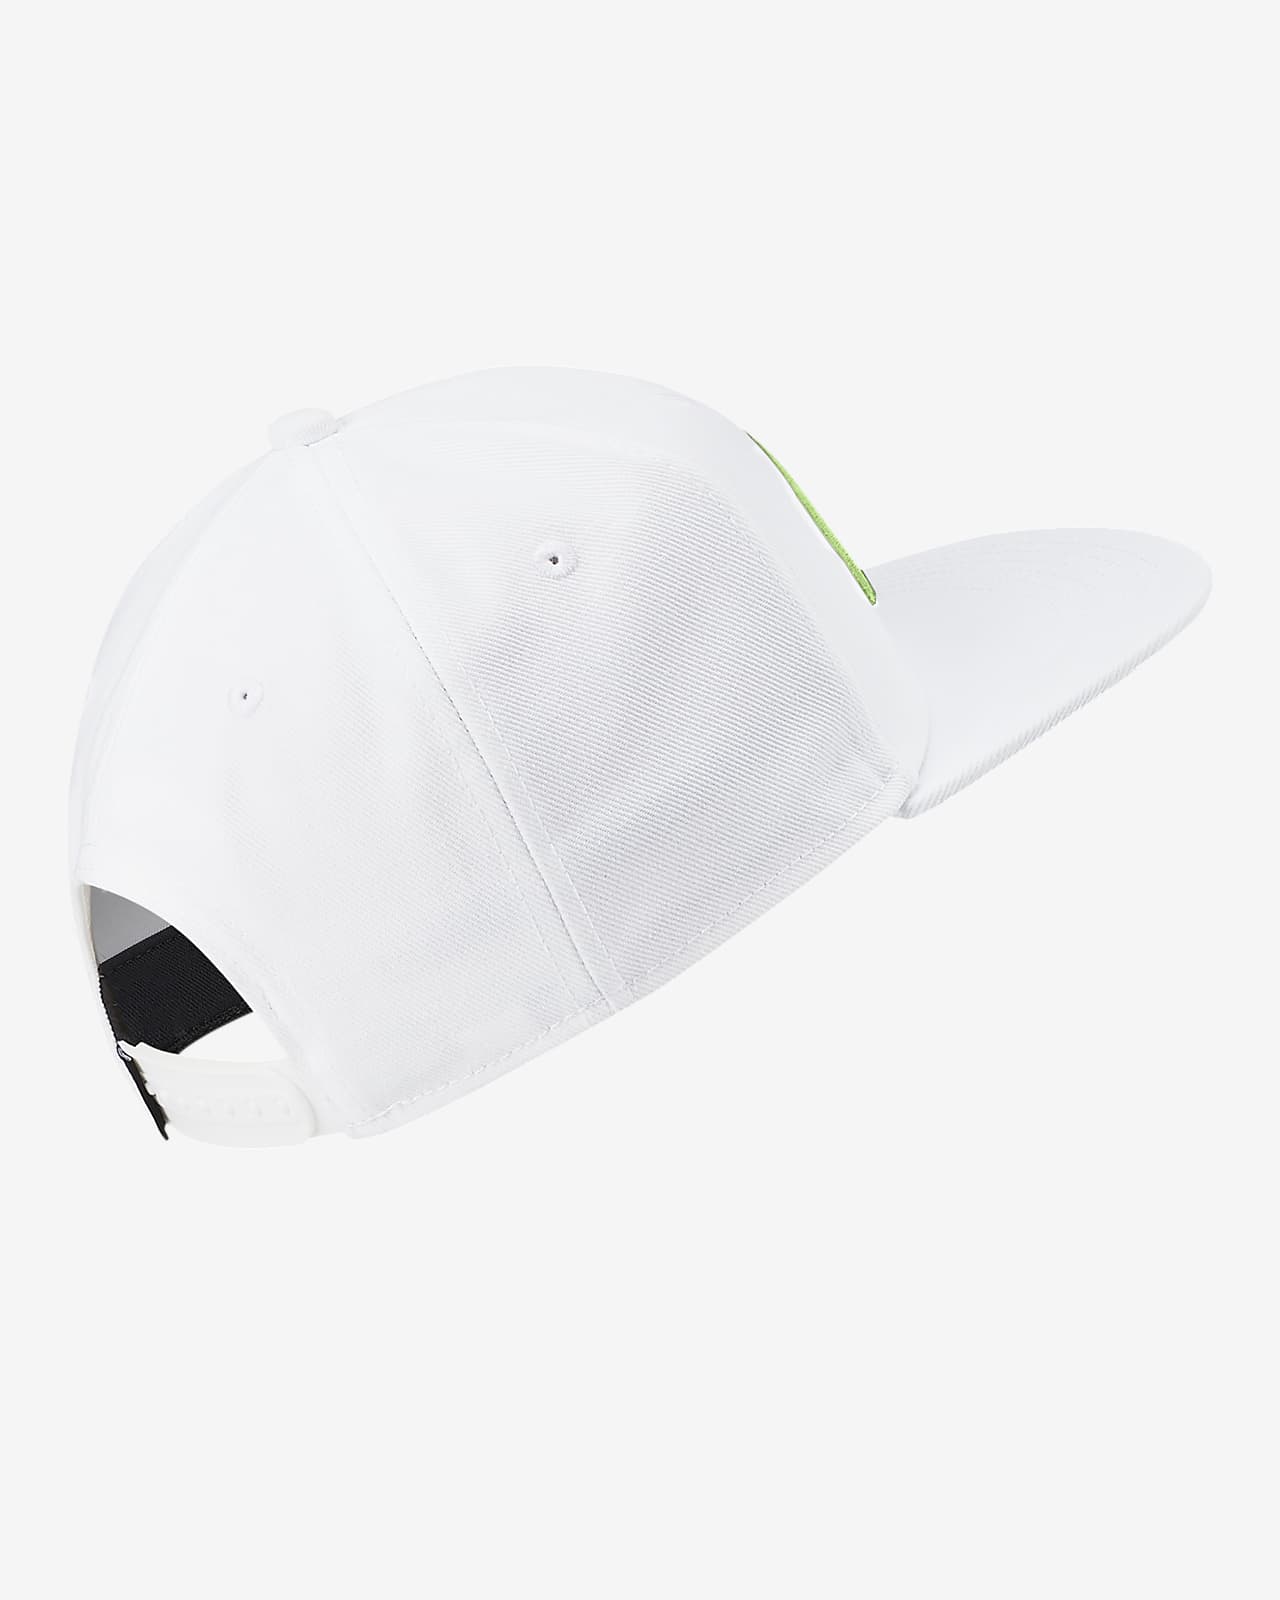 Nike Pro Kids' Adjustable Hat. Nike.com